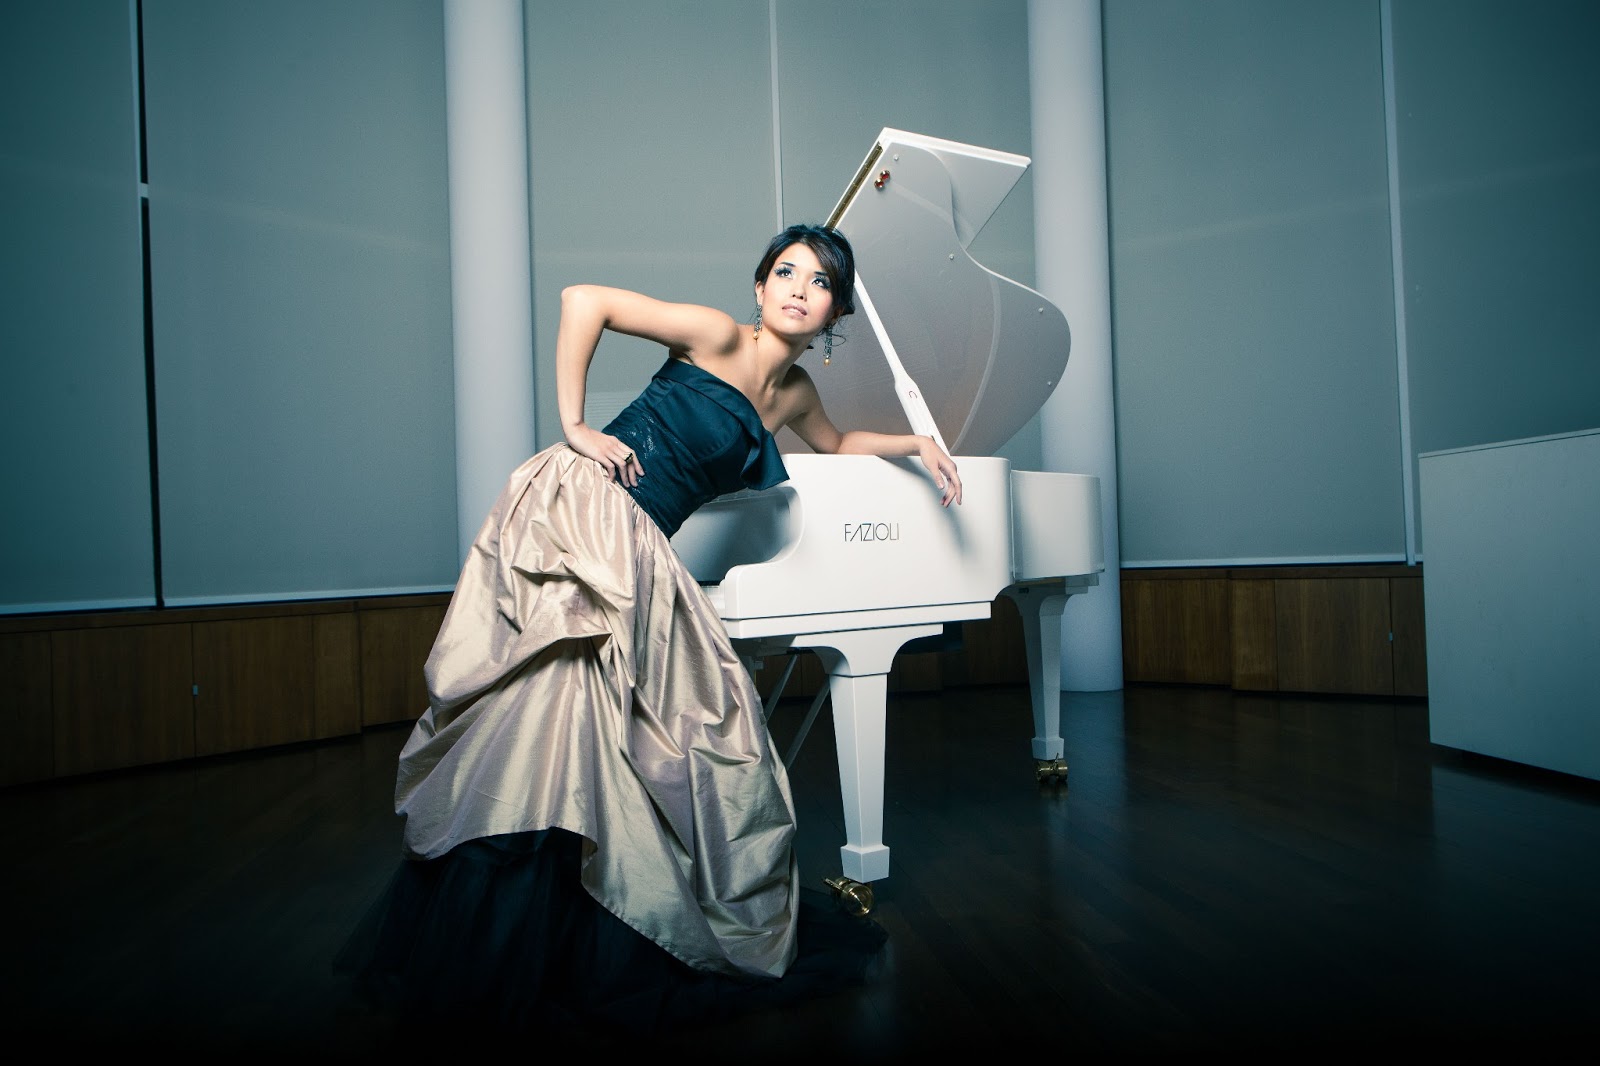 European Pianos in Vancouver | Local talent featured in new Fazioli ad ...